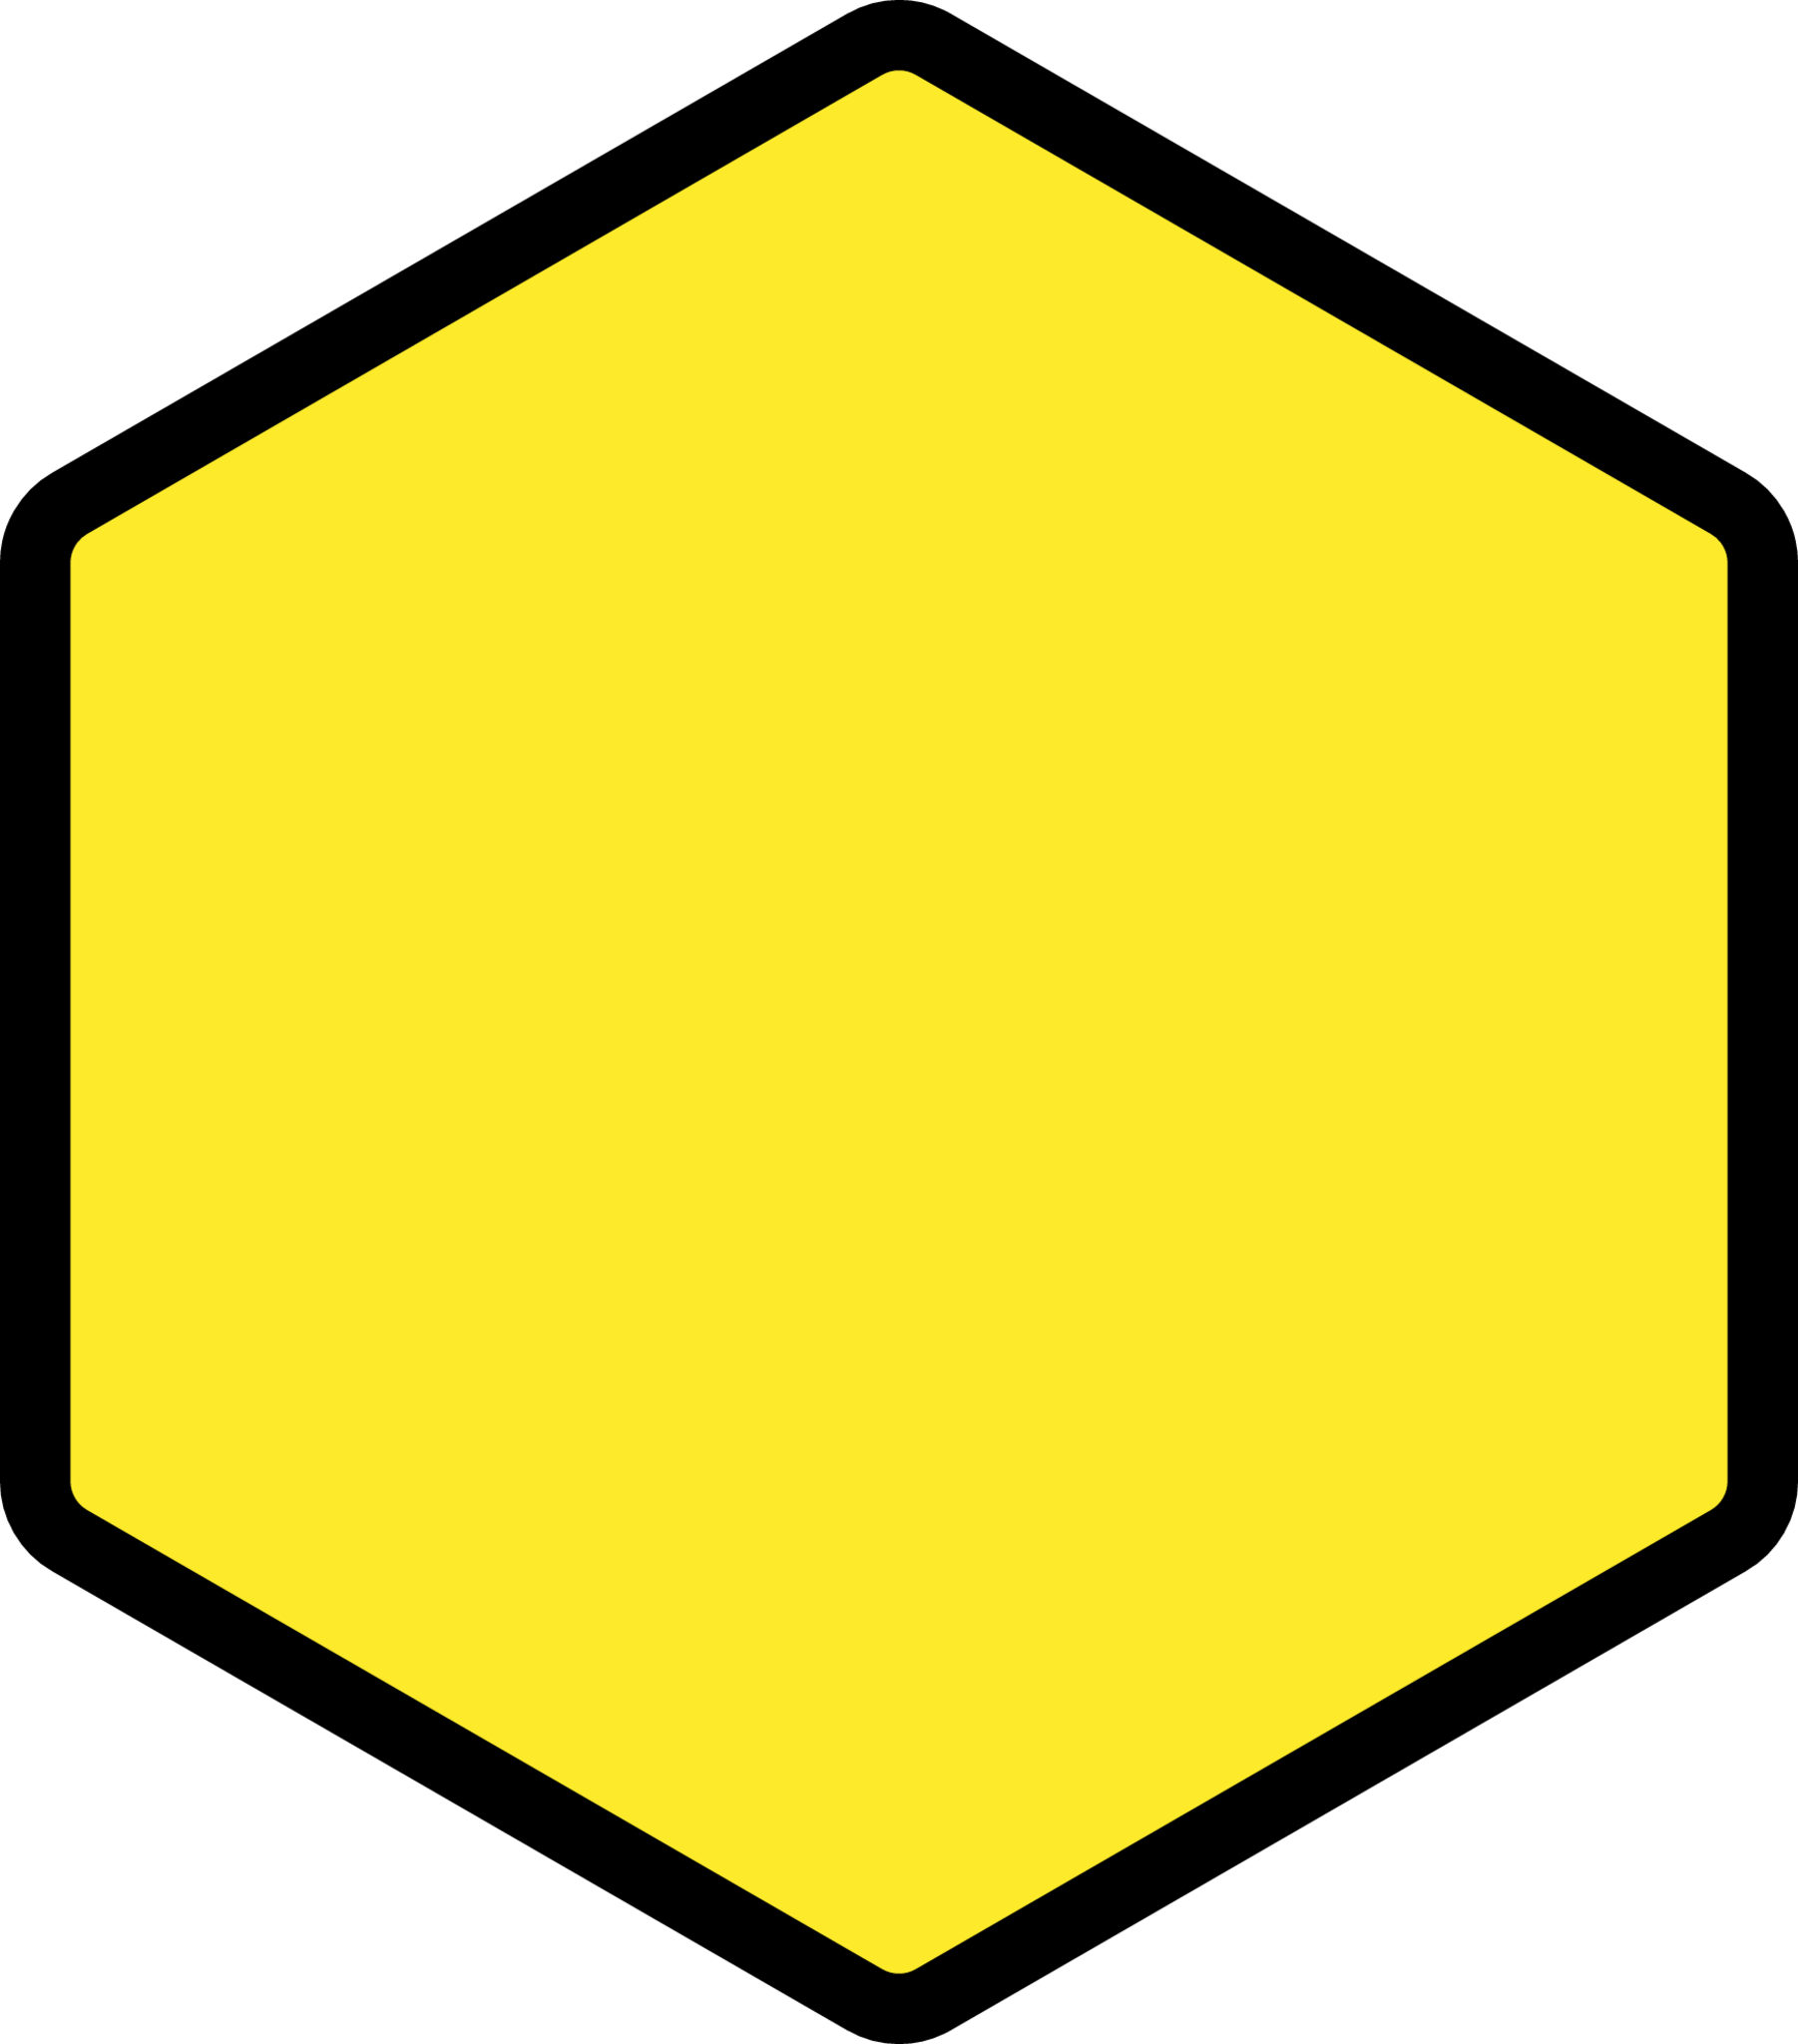 cyan hexagon